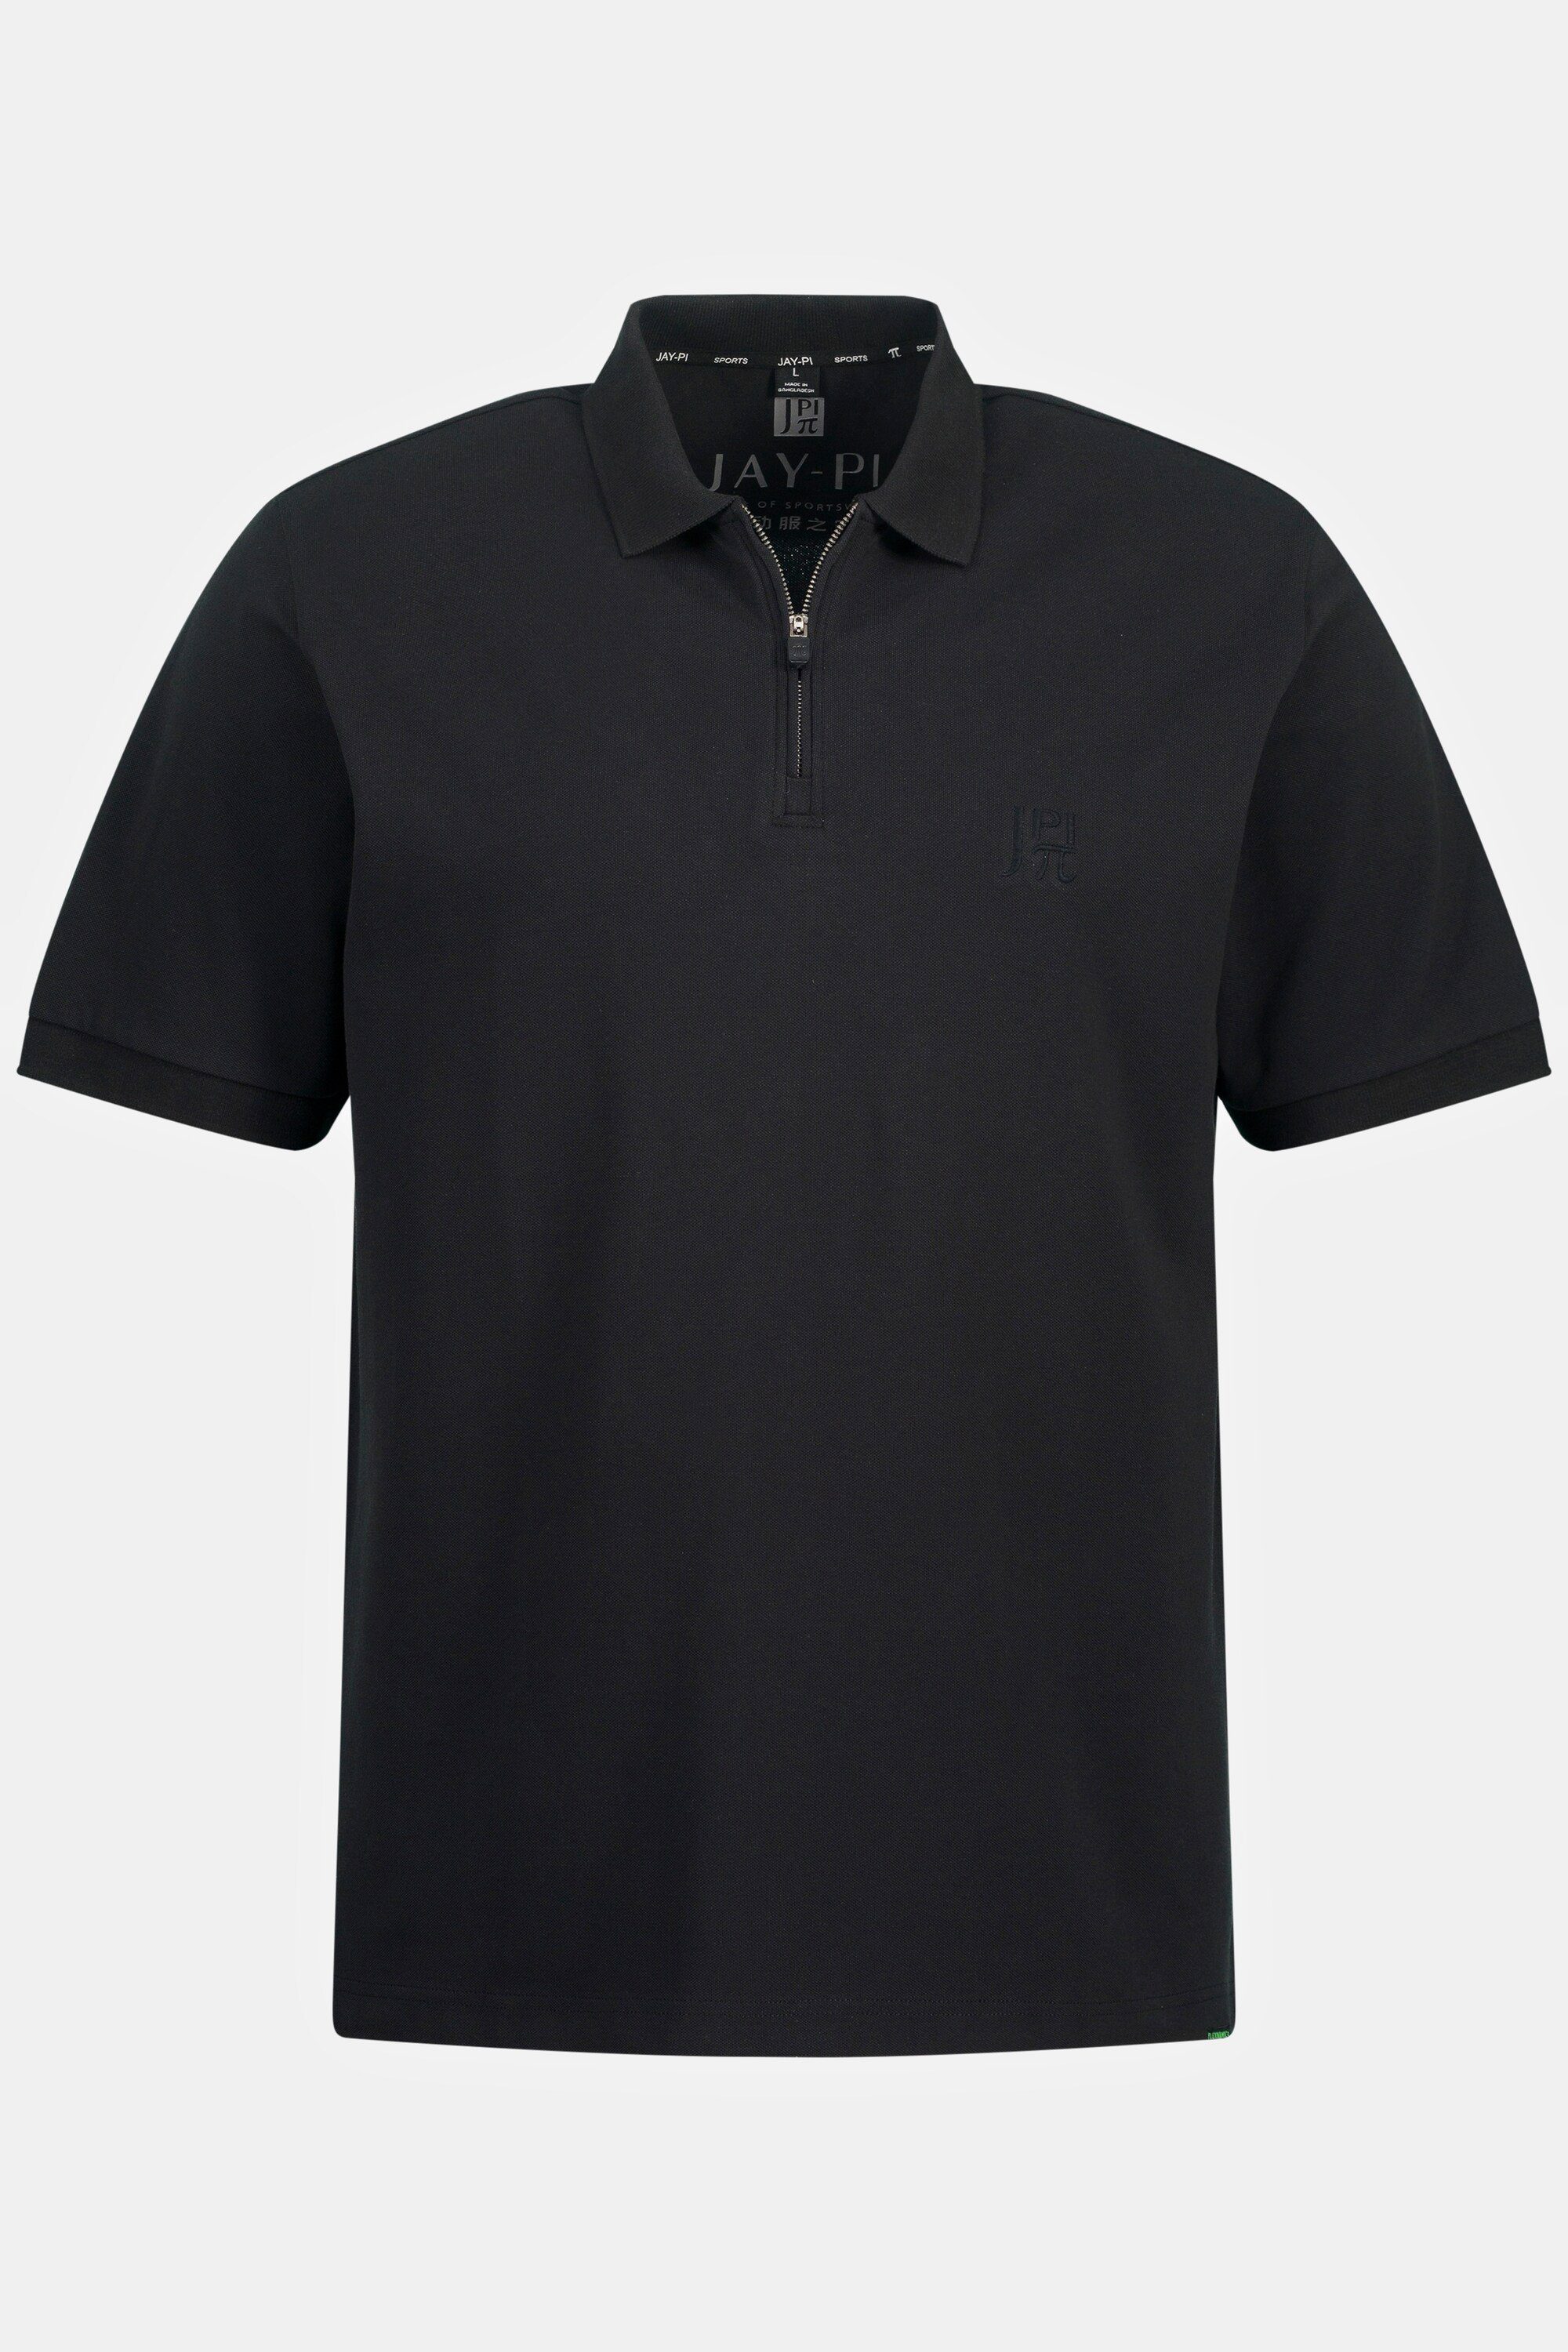 JP1880 schwarz Outdoot Piqué Poloshirt Poloshirt Halbarm FLEXNAMIC®